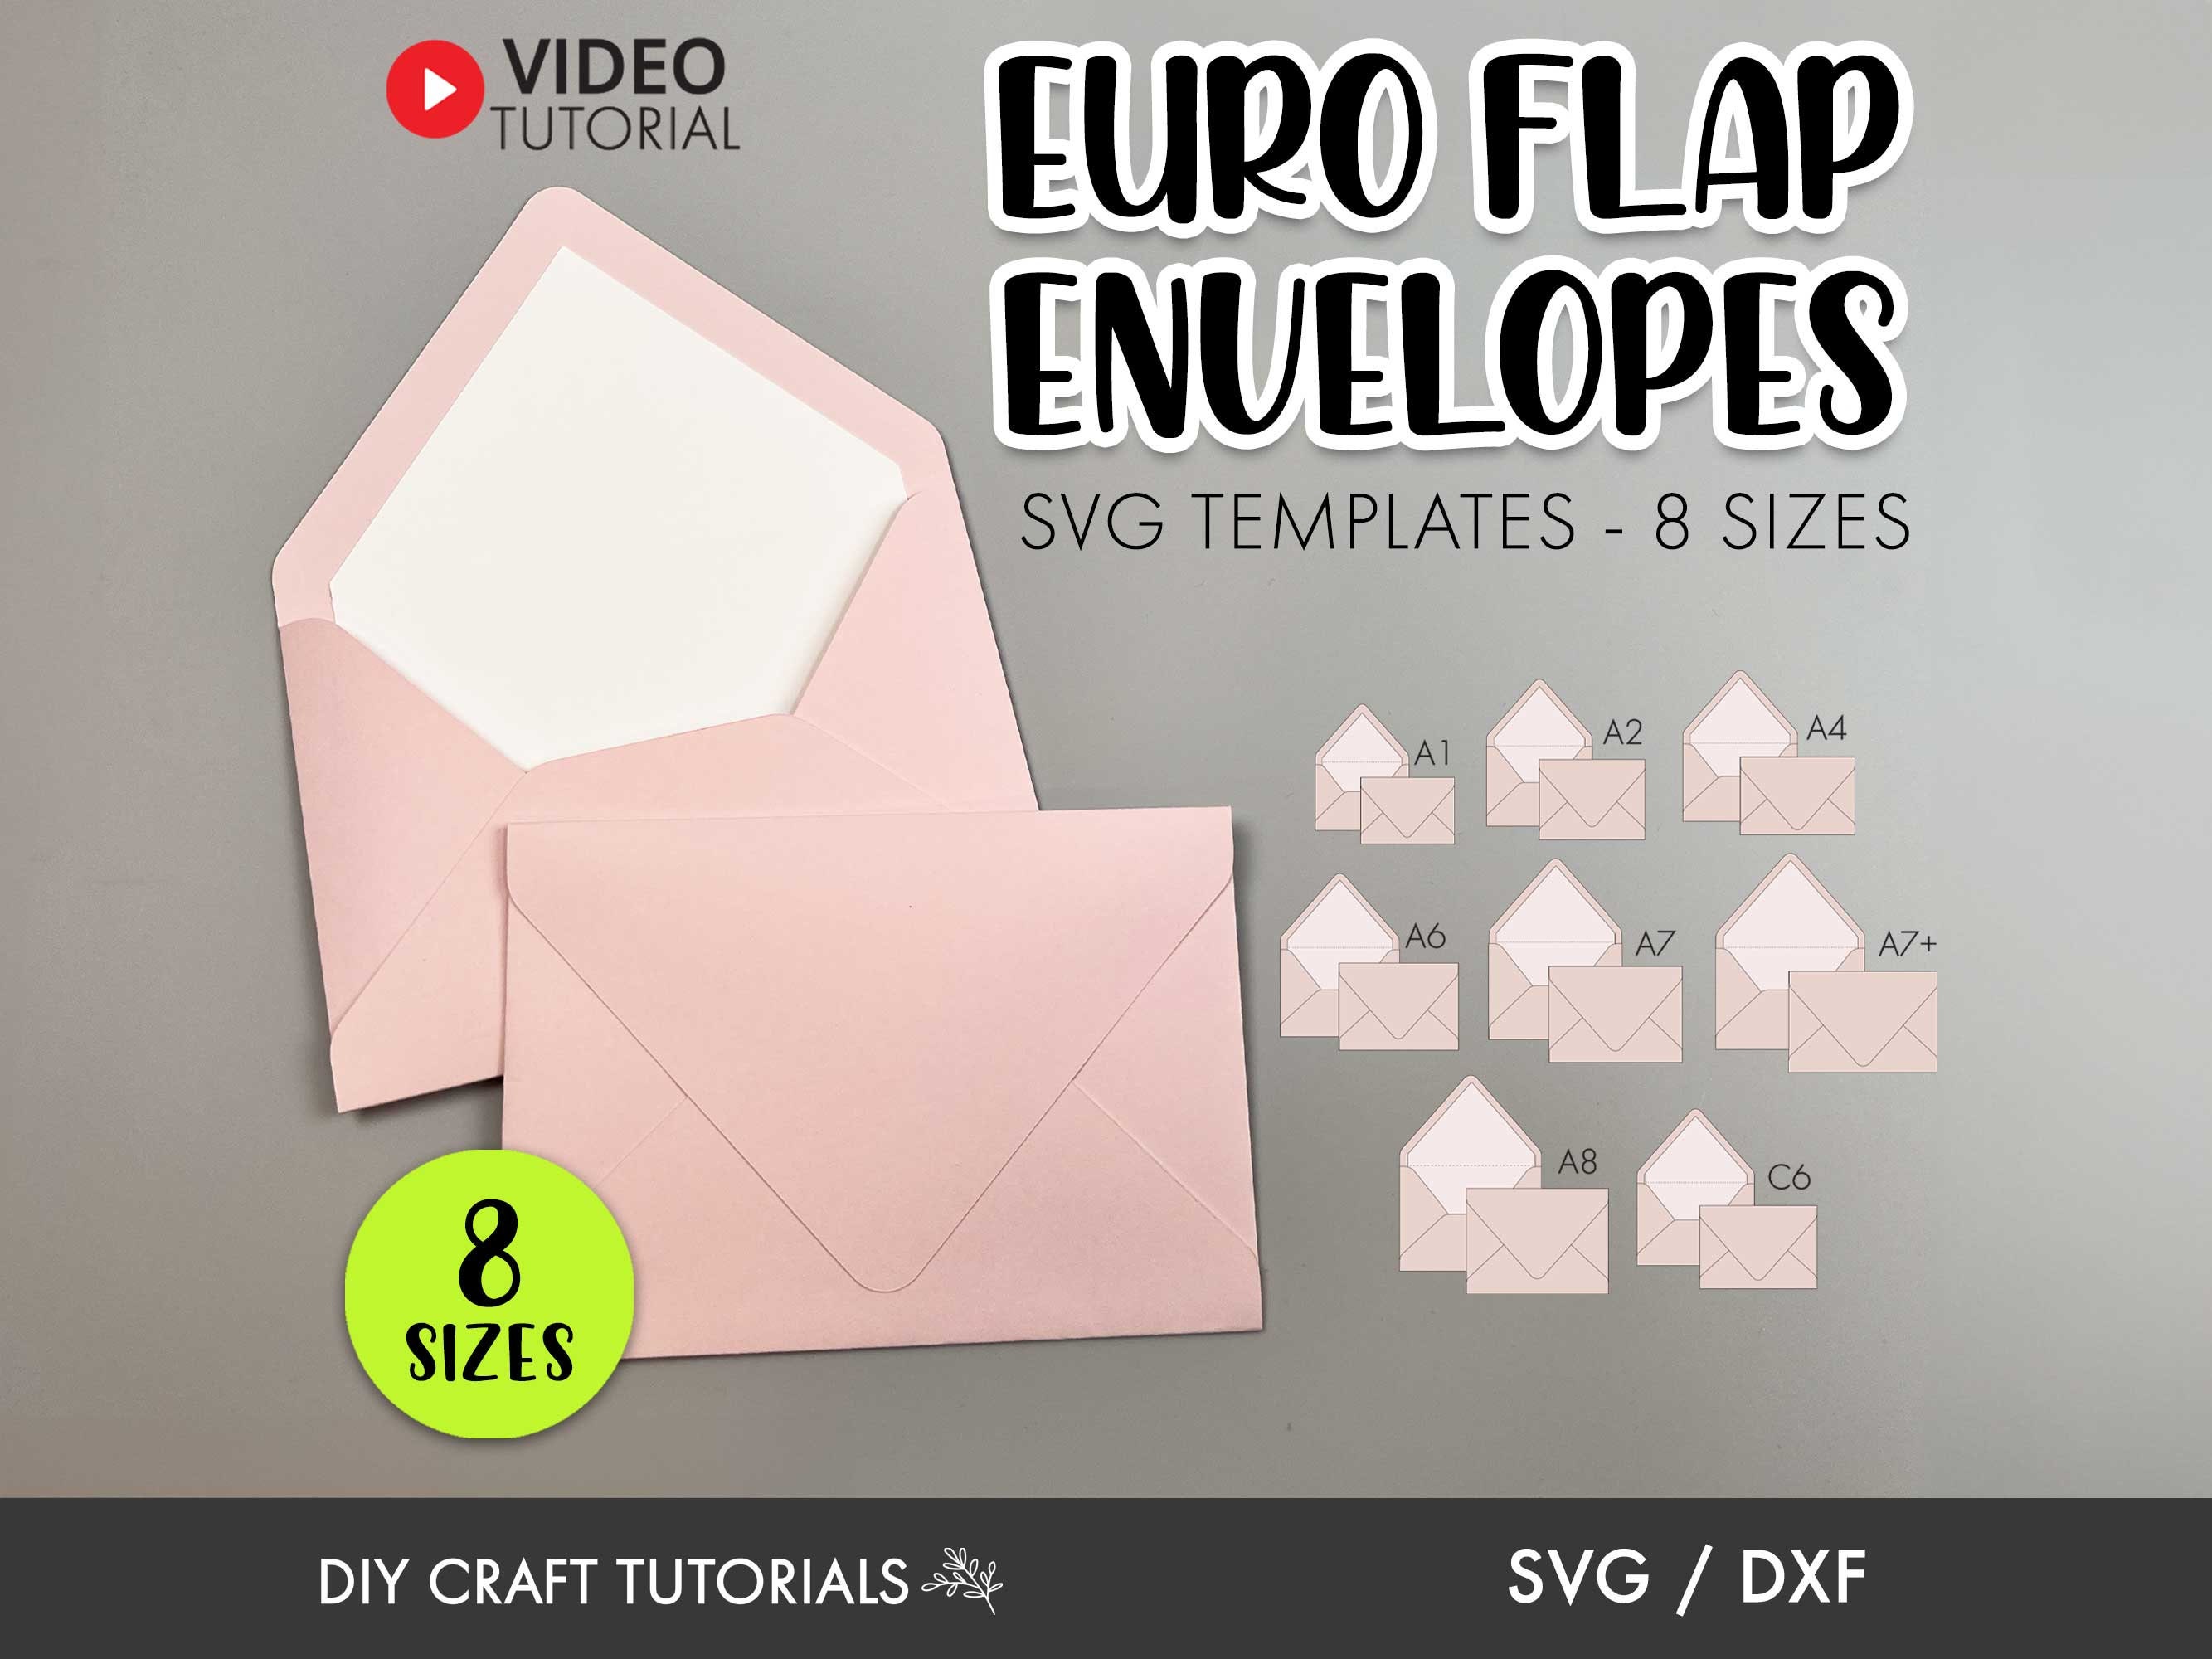 Parcel Wrap Kraft Envelopes - No. 10 Square Flap (4 1/8 x 9 1/2) 70 lb Text  Vellum 100% Recycled